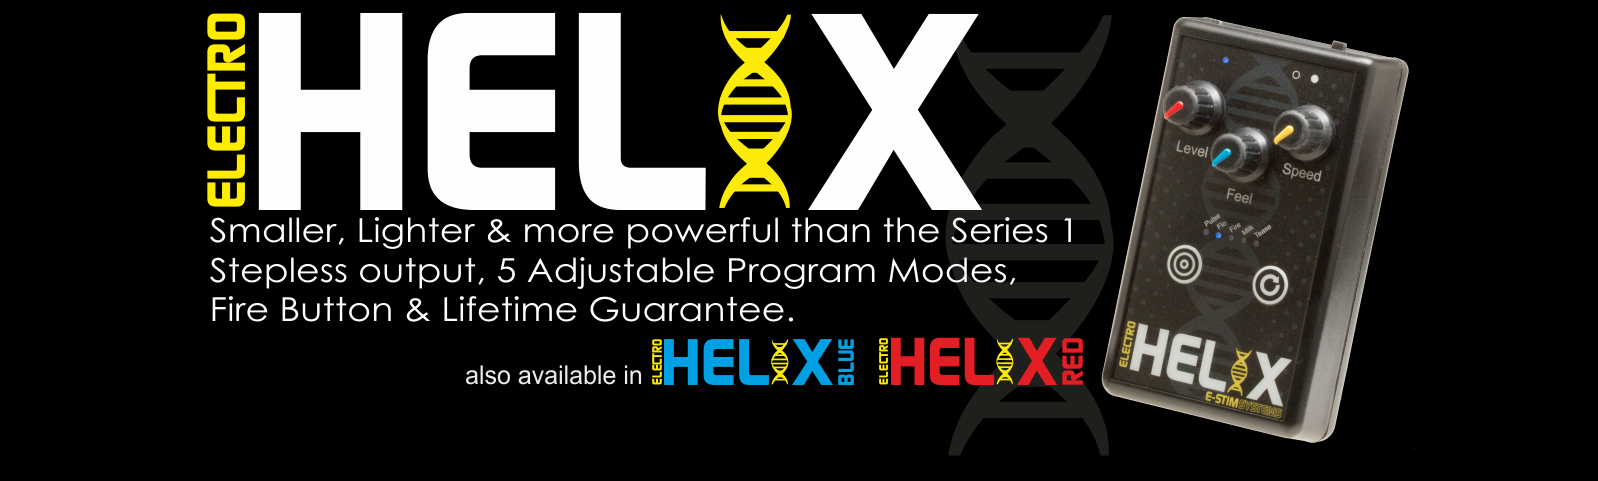 the ElectroHelix has 5 program modes